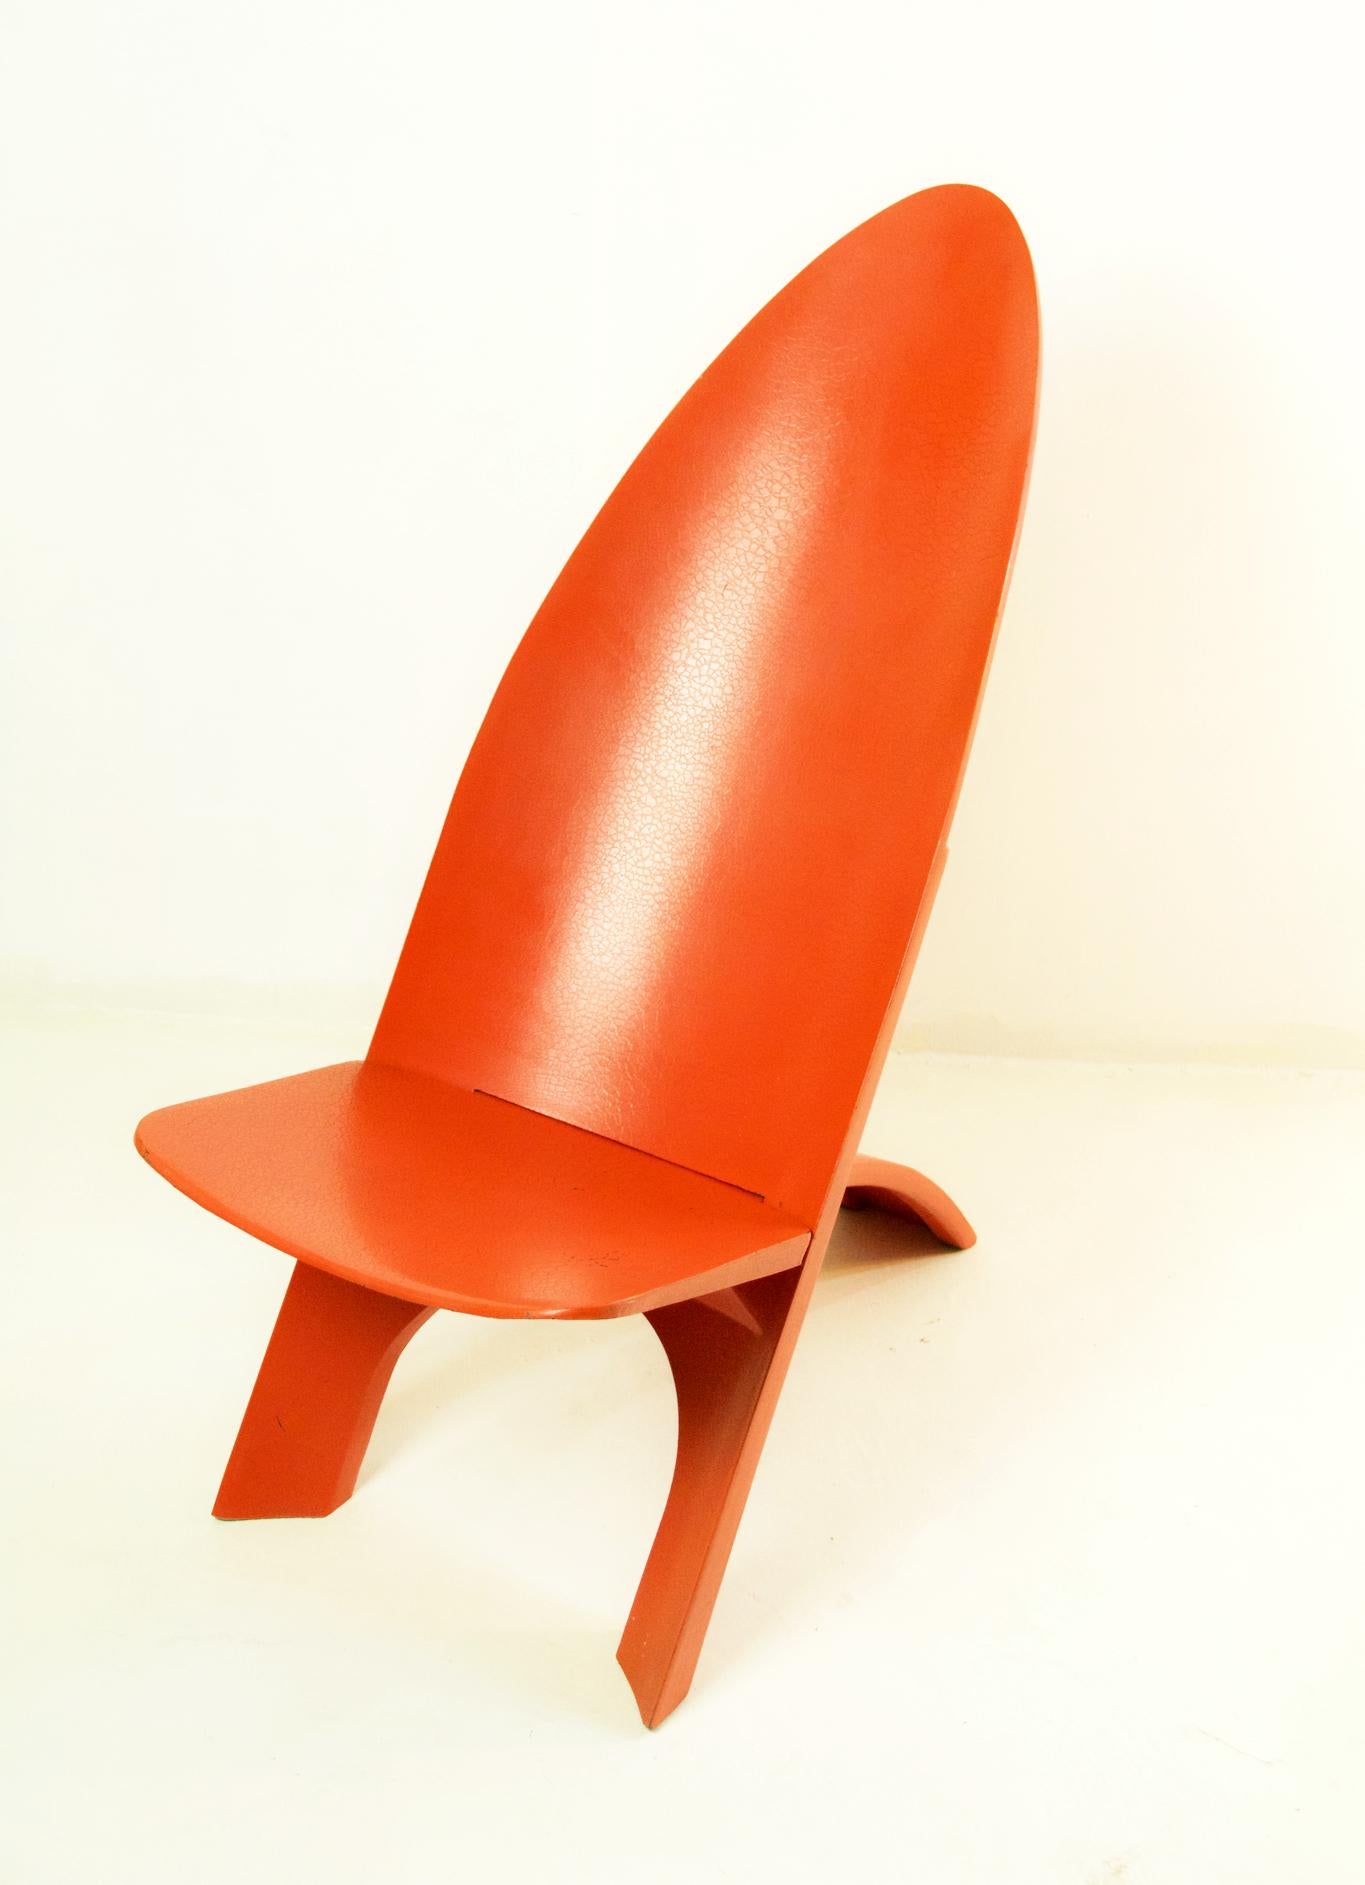 German Midcentury Chair by Dr B. Schwarz for Demury Design